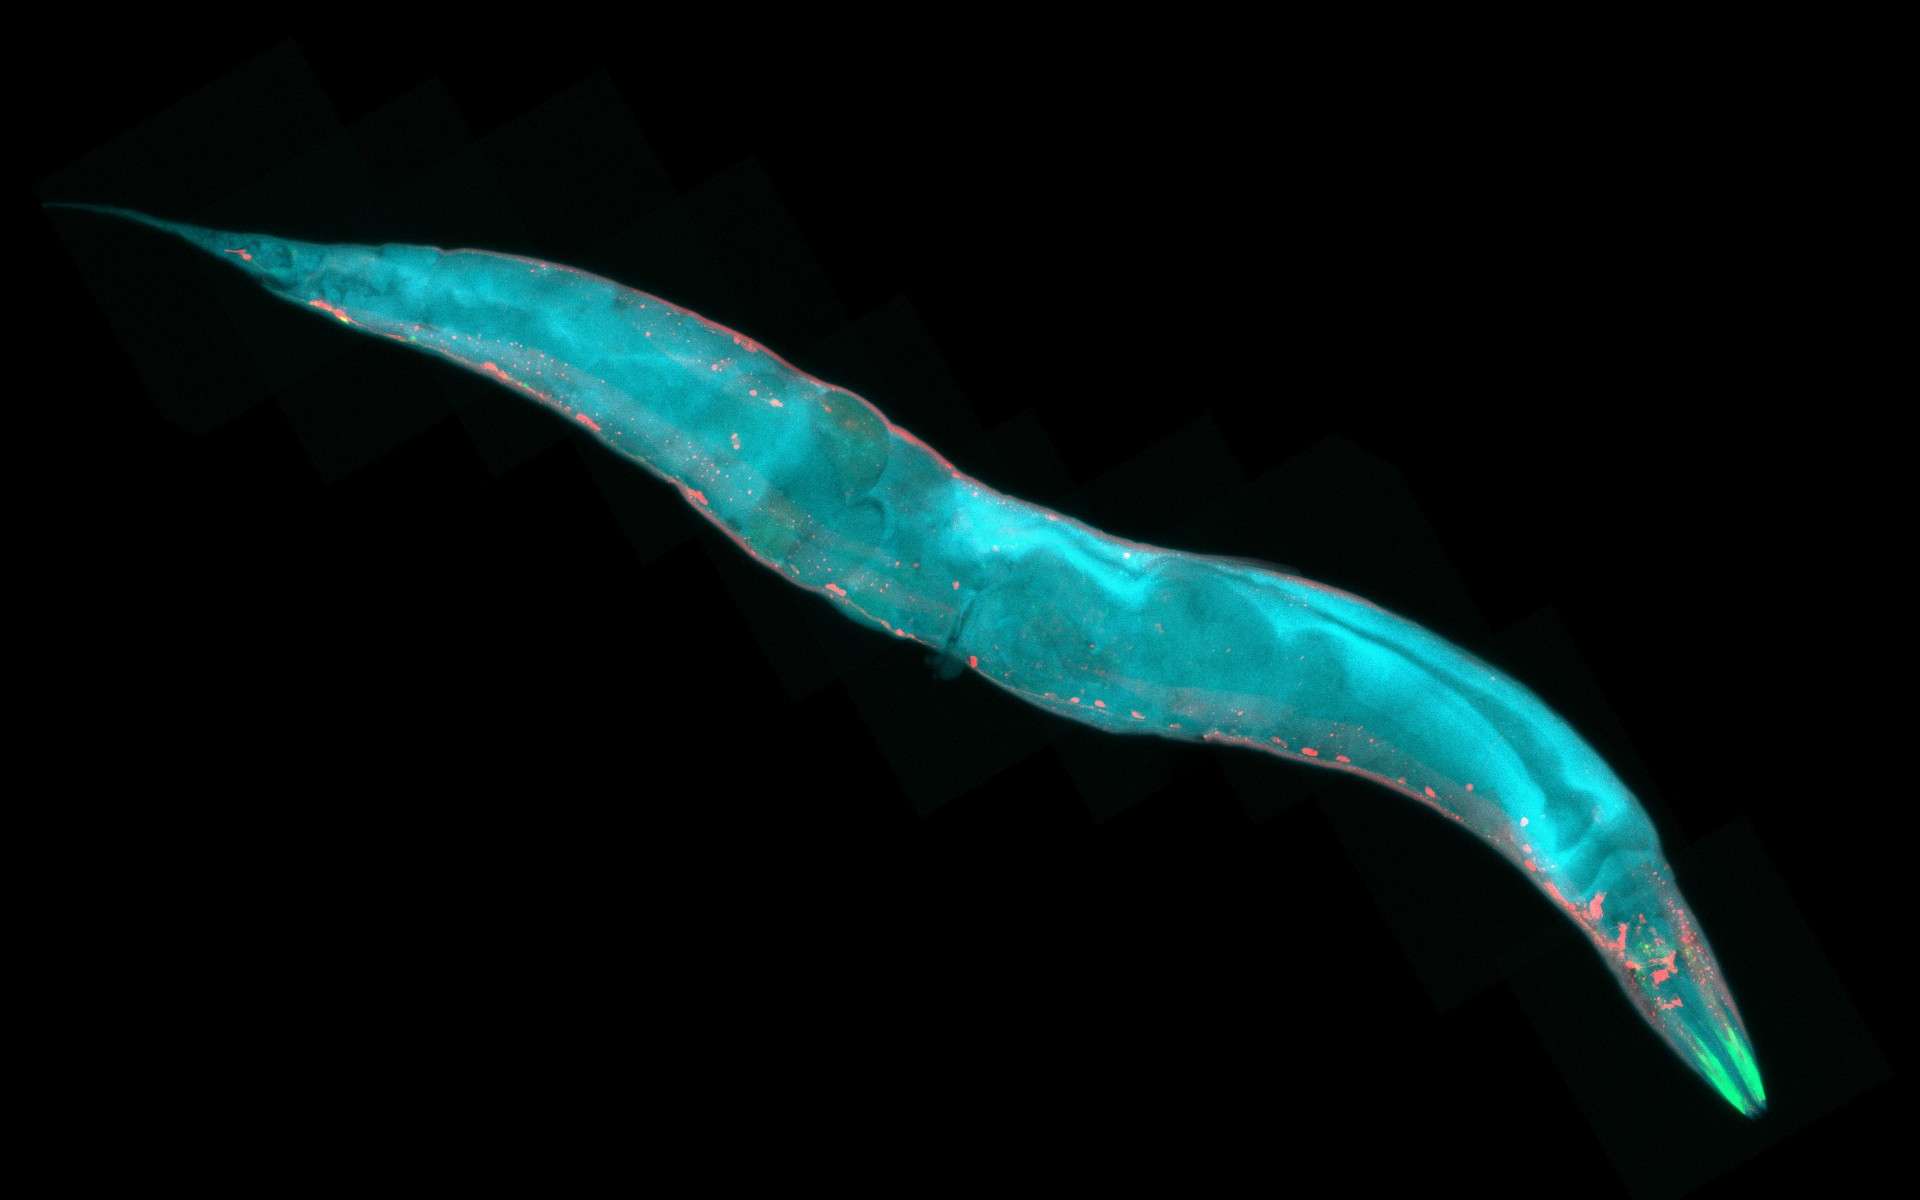 Un nématode C. elegans vu au microscope et colorisé. © heitipaves, Adobe Stock